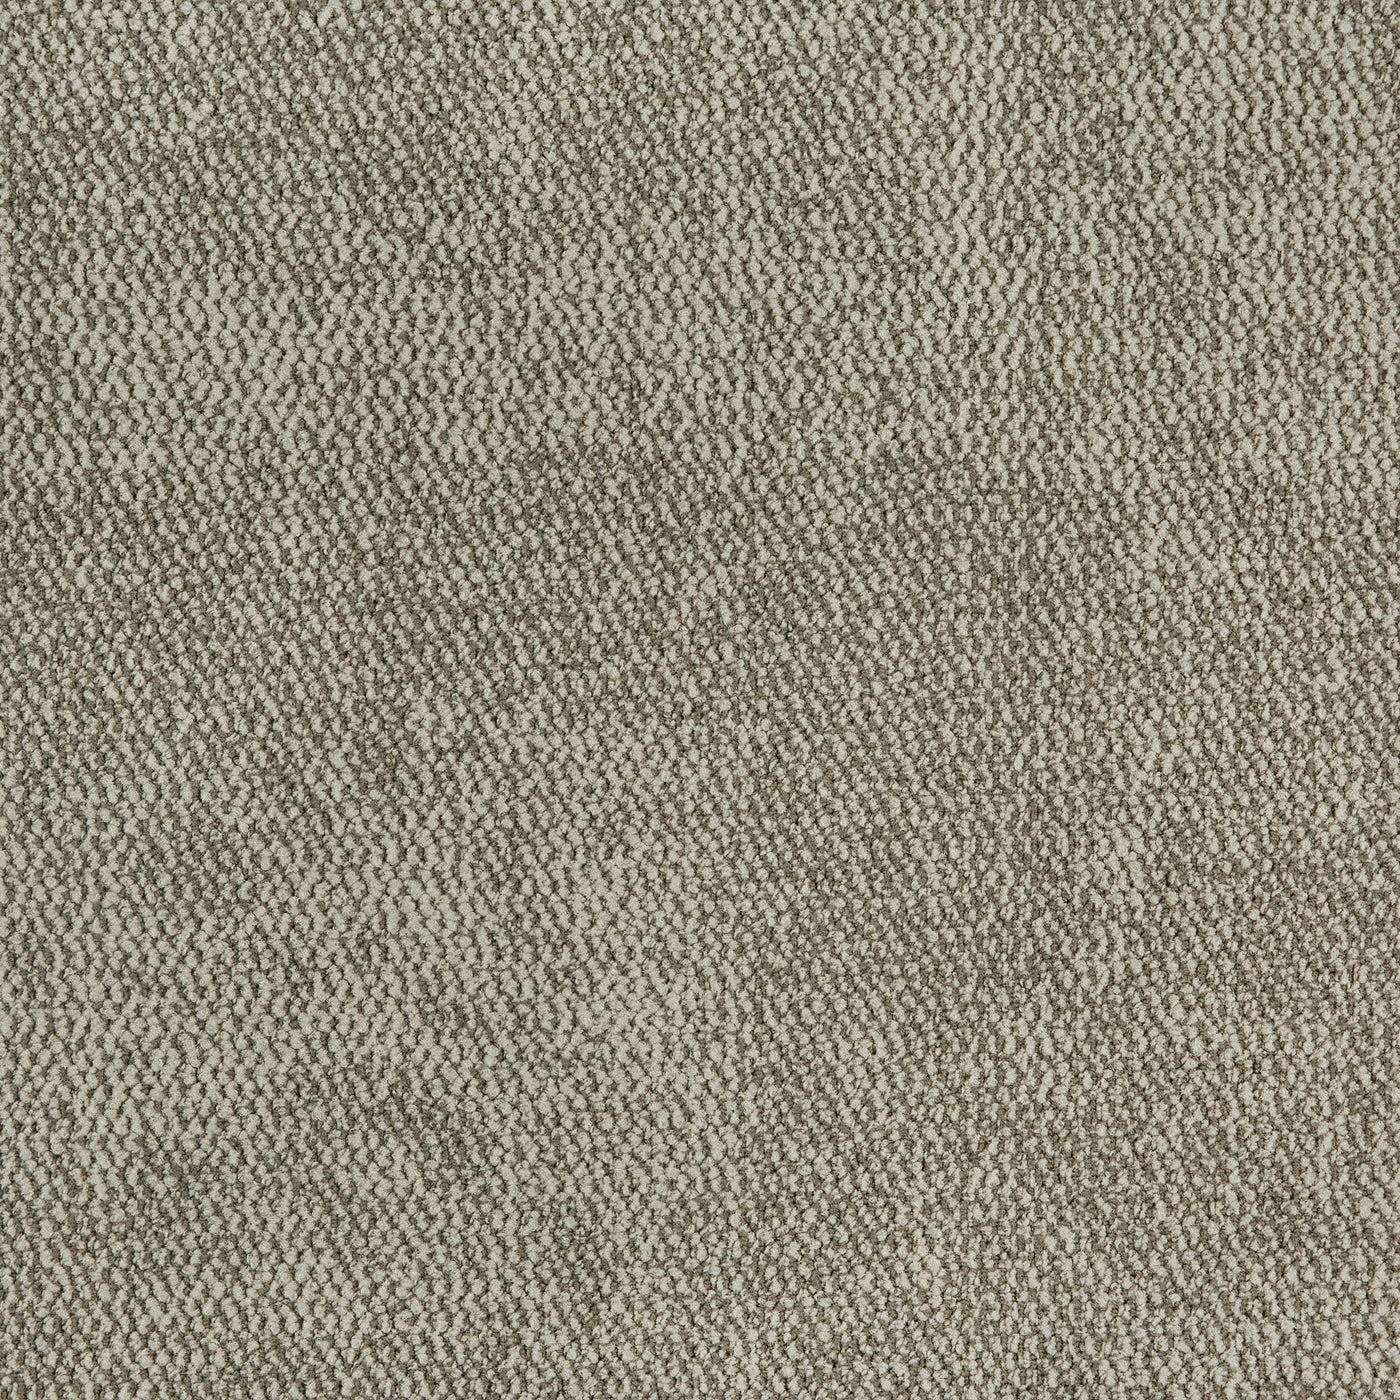 Ice - Innovflor Carpet Tiles